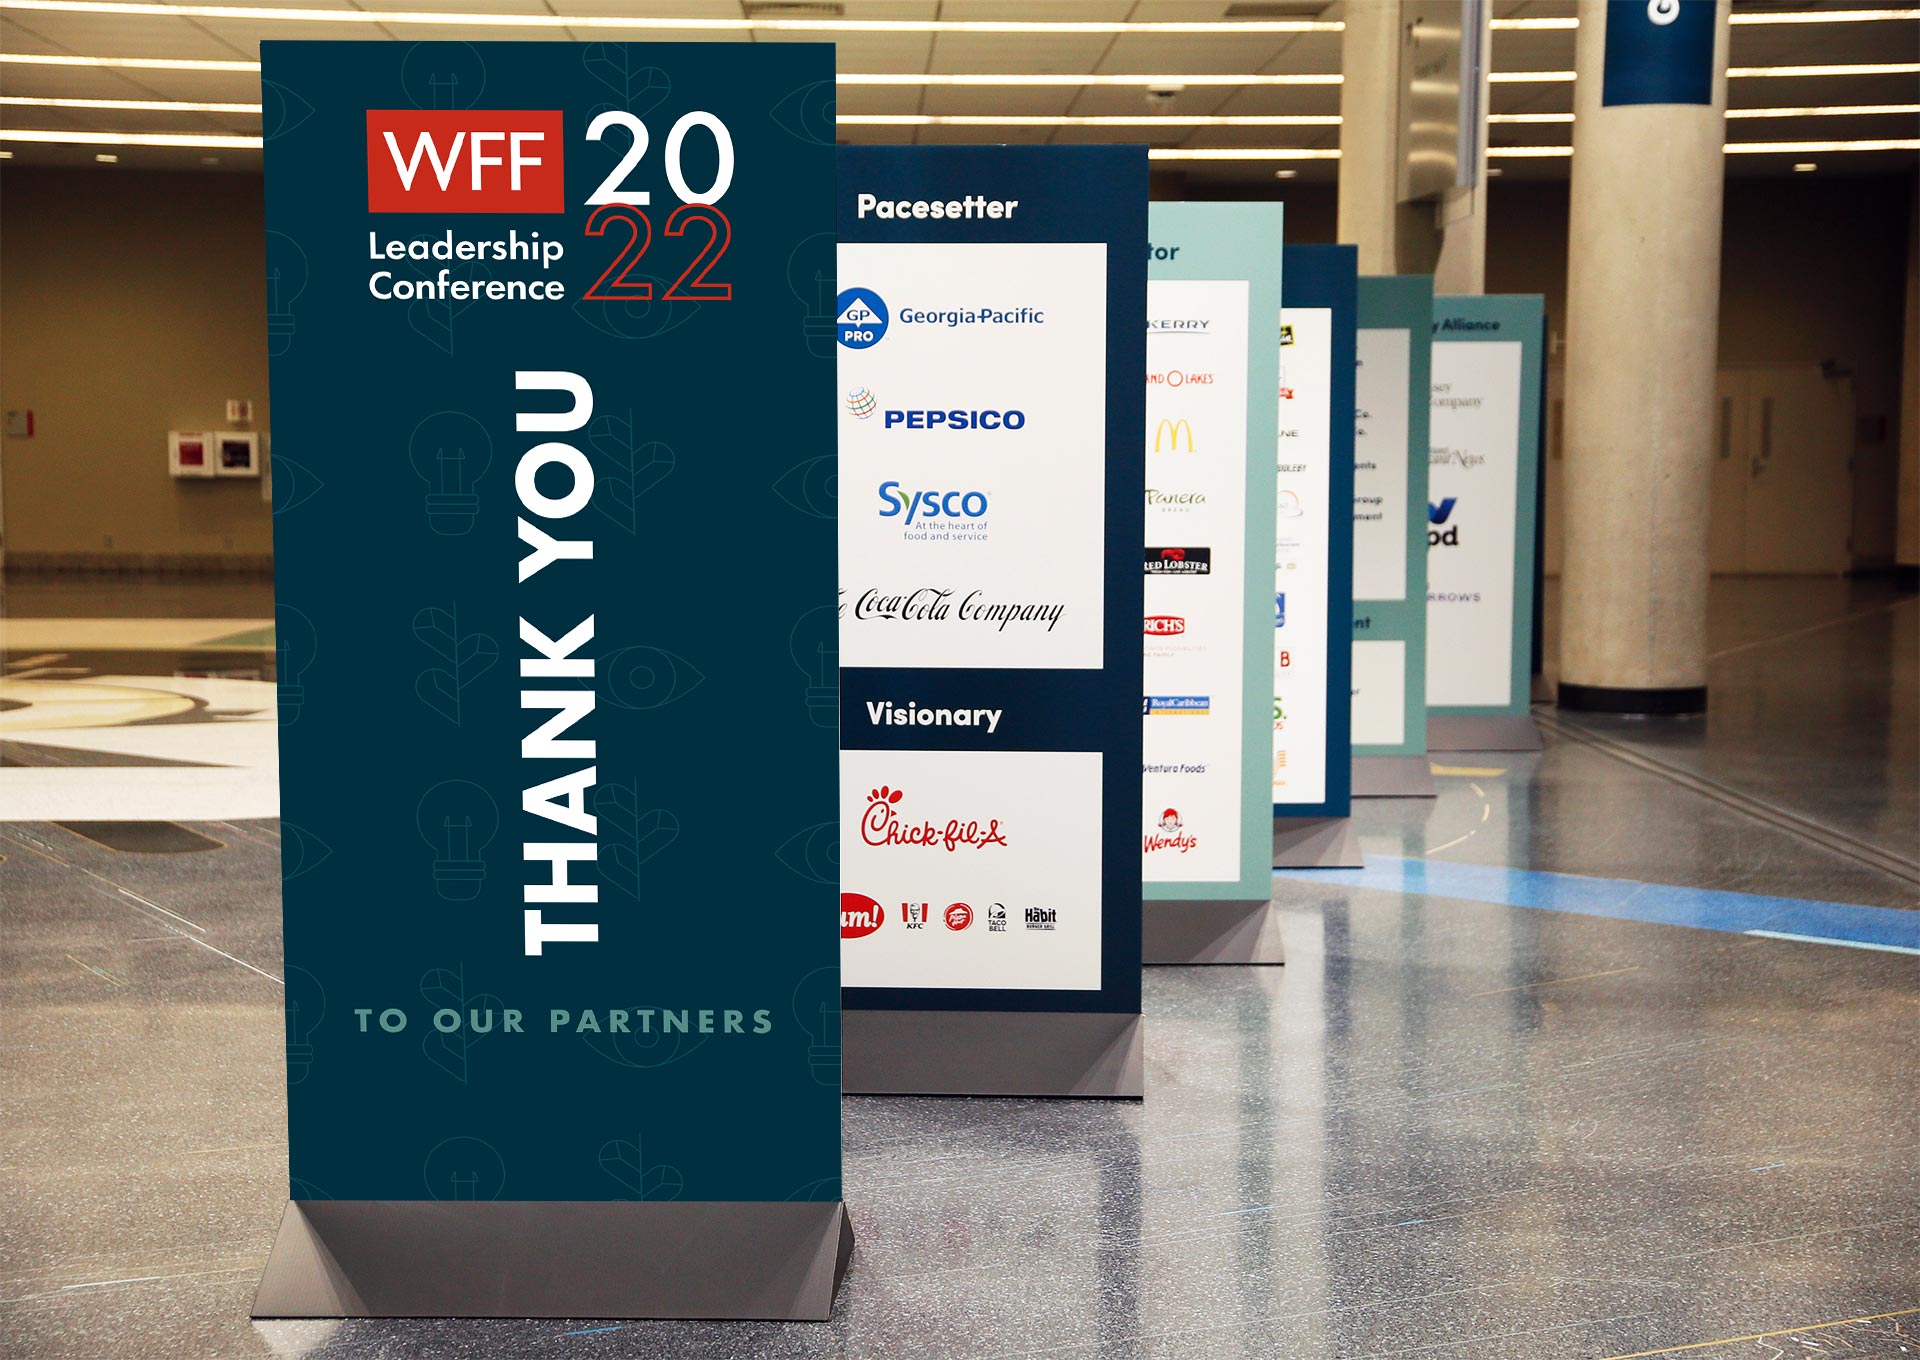 wff-leadership-conference-signage-meter-boards